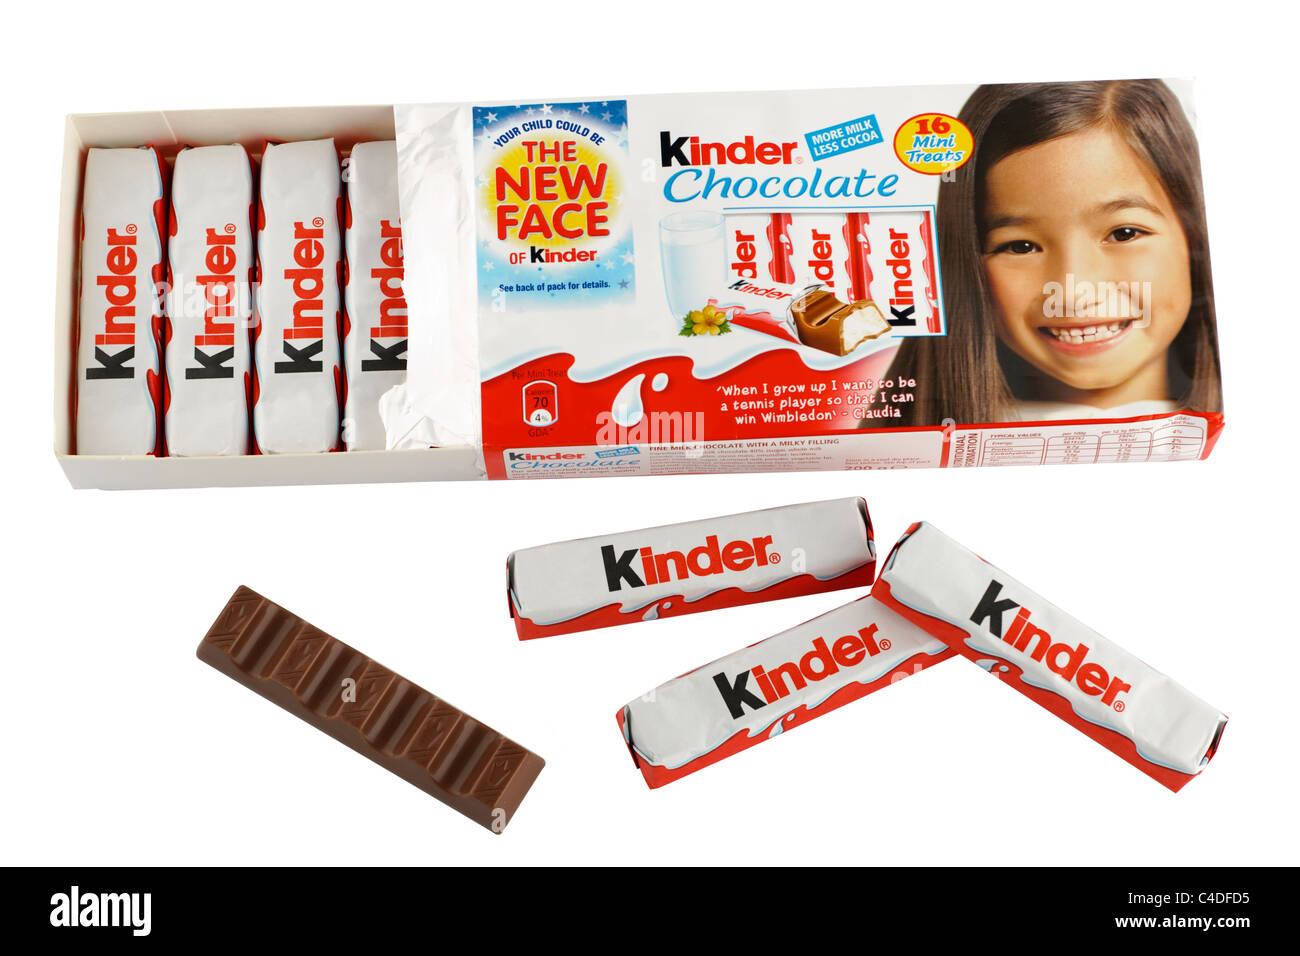 Pack of 16 Kinder mini treats chocolate covered bars Stock Photo